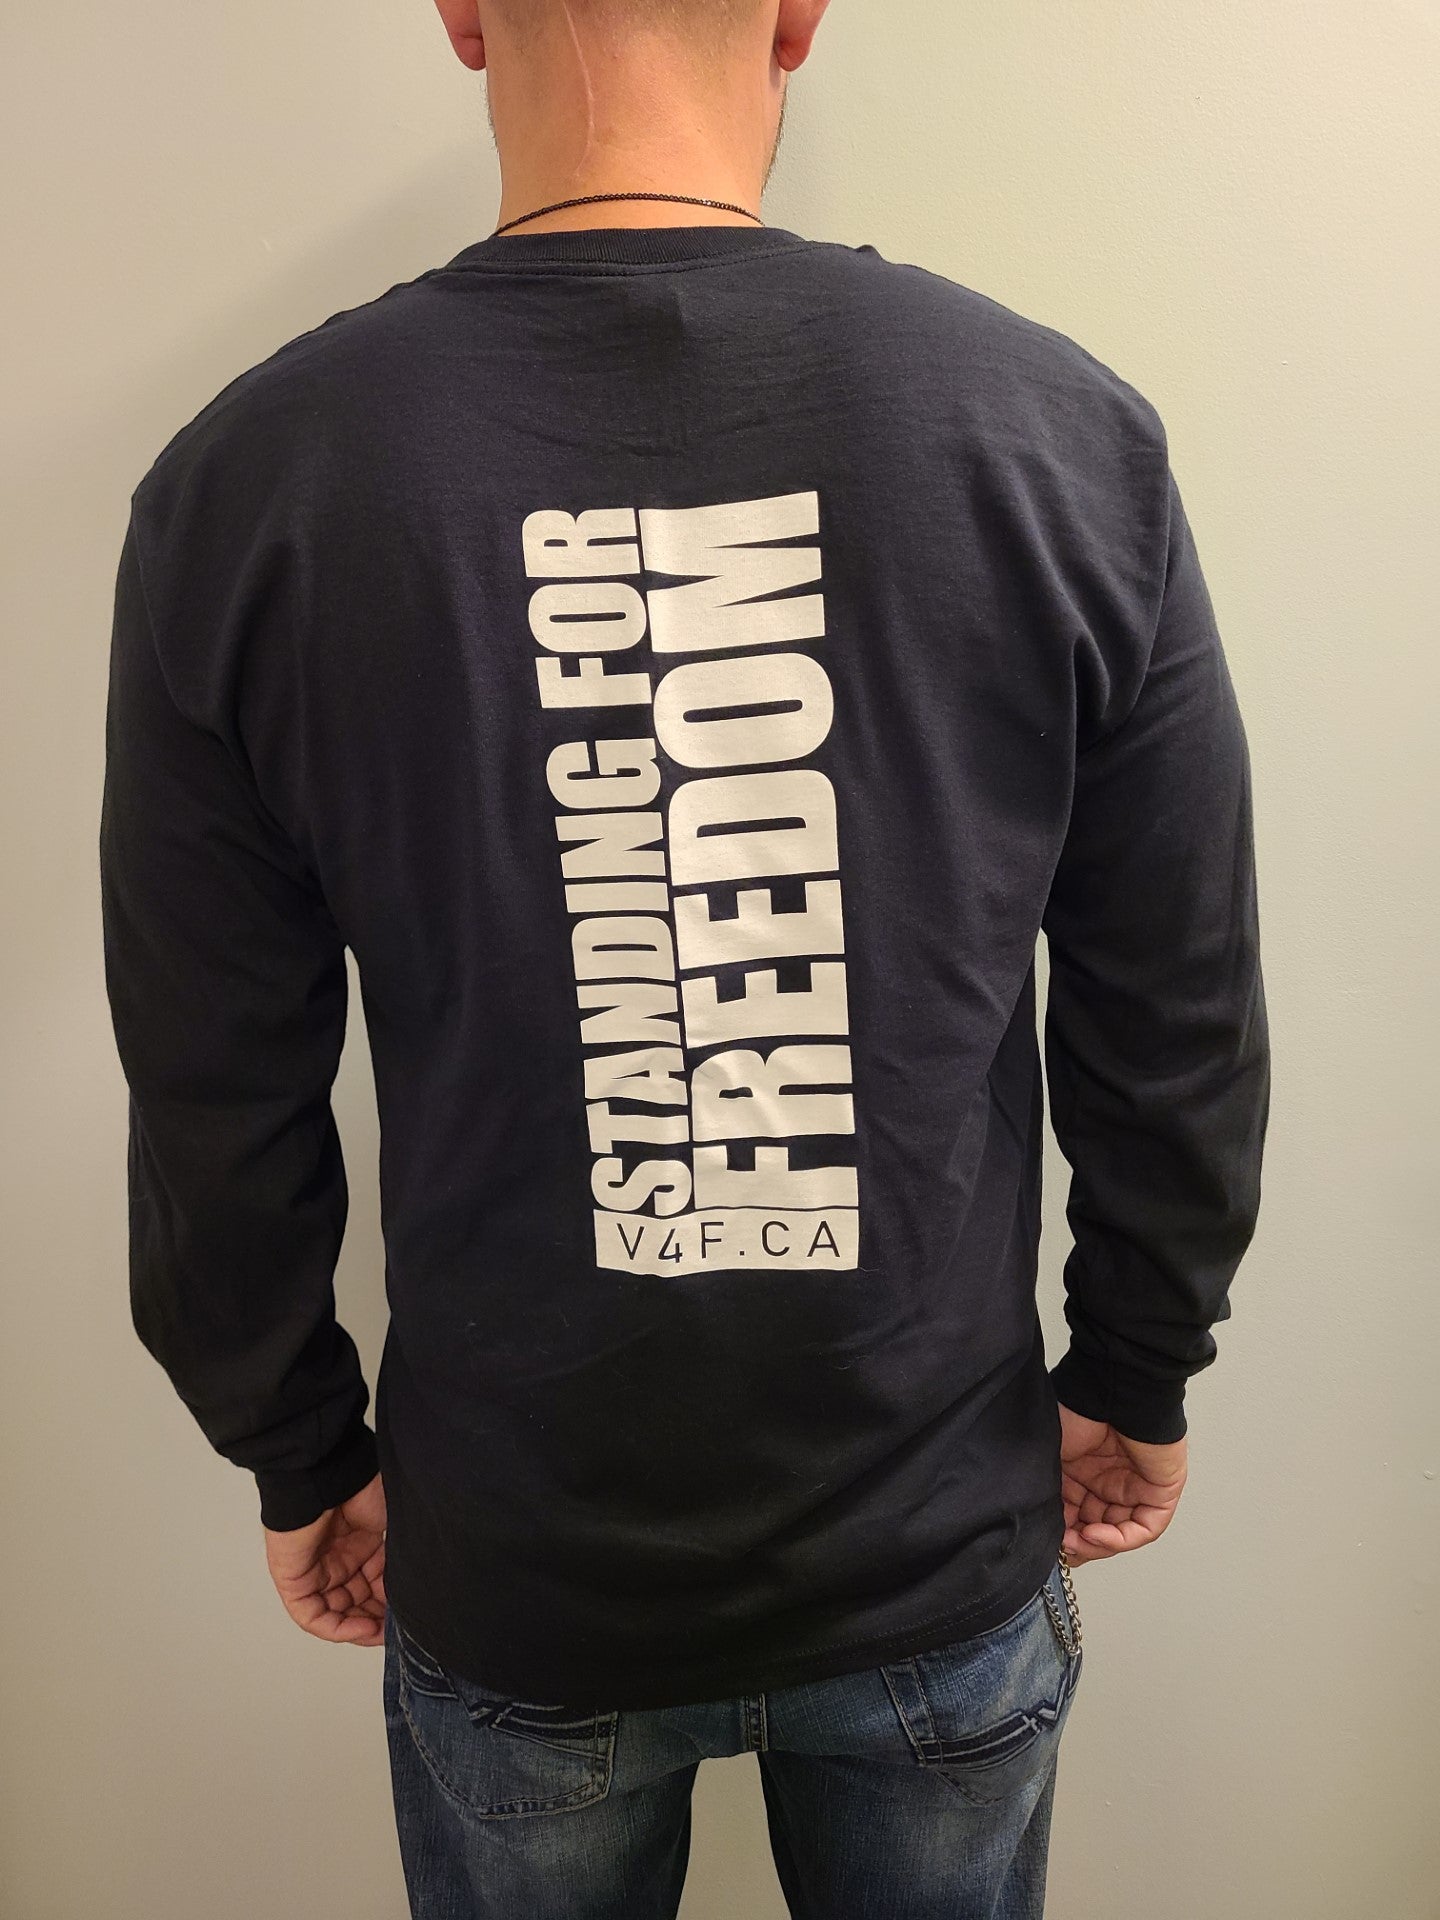 V4F Long-Sleeve Shirt "Standing for Freedom" (fundraising)